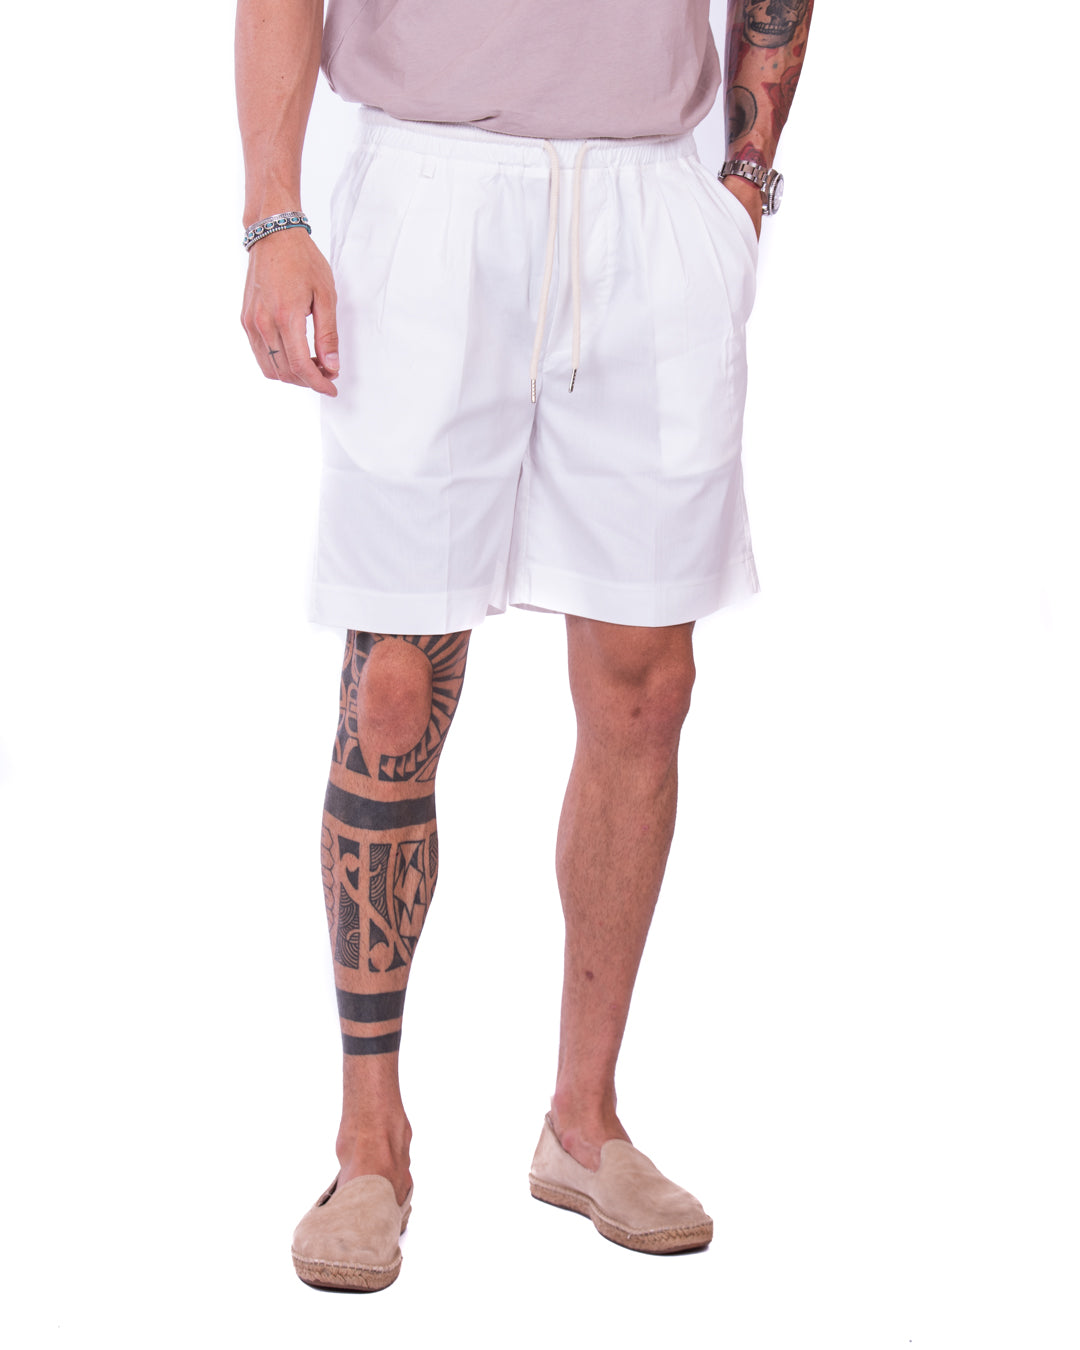 Larry - white cotton Bermuda shorts